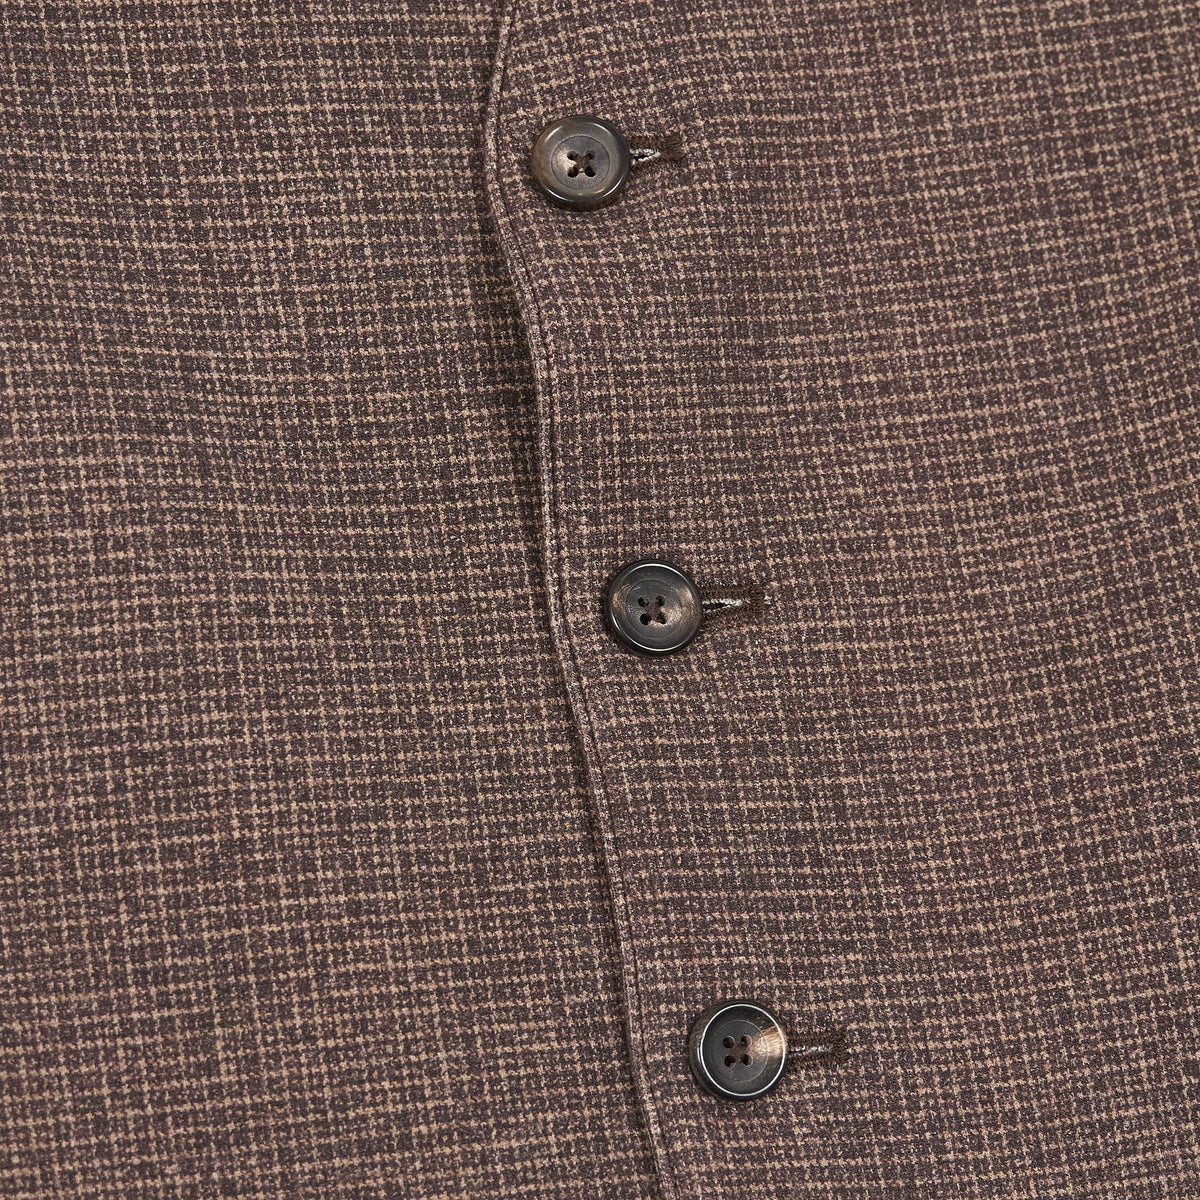 Circolo Knitted Cotton Fleece Vest